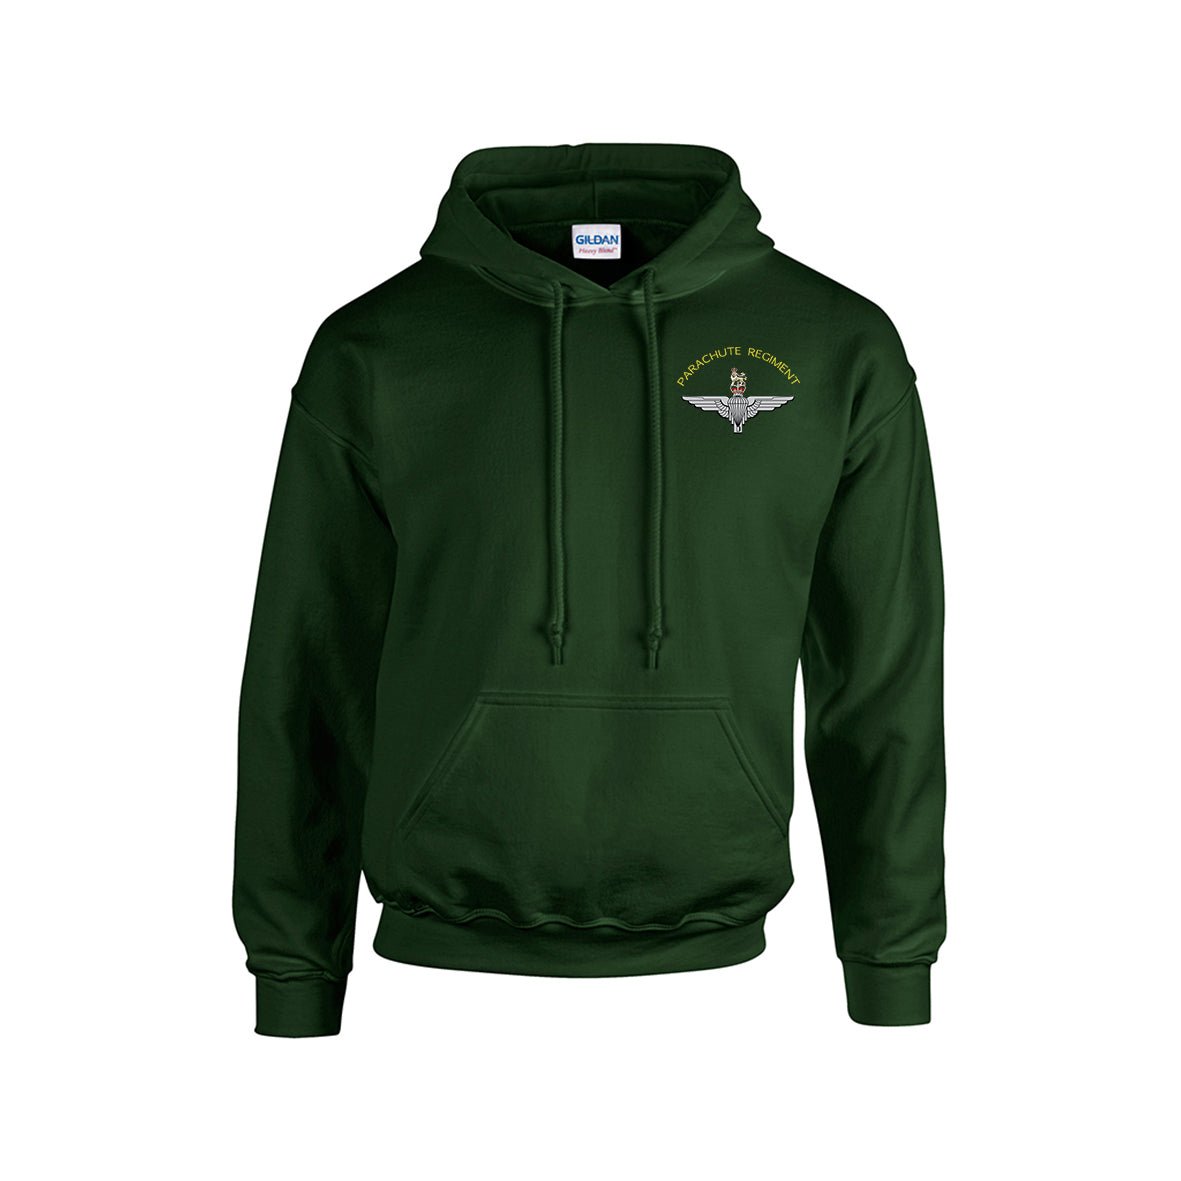 GD57 - Heavy Blend Hooded sweatshirt - Parachute Regiment - Bespoke Emerald Embroidery Ltd